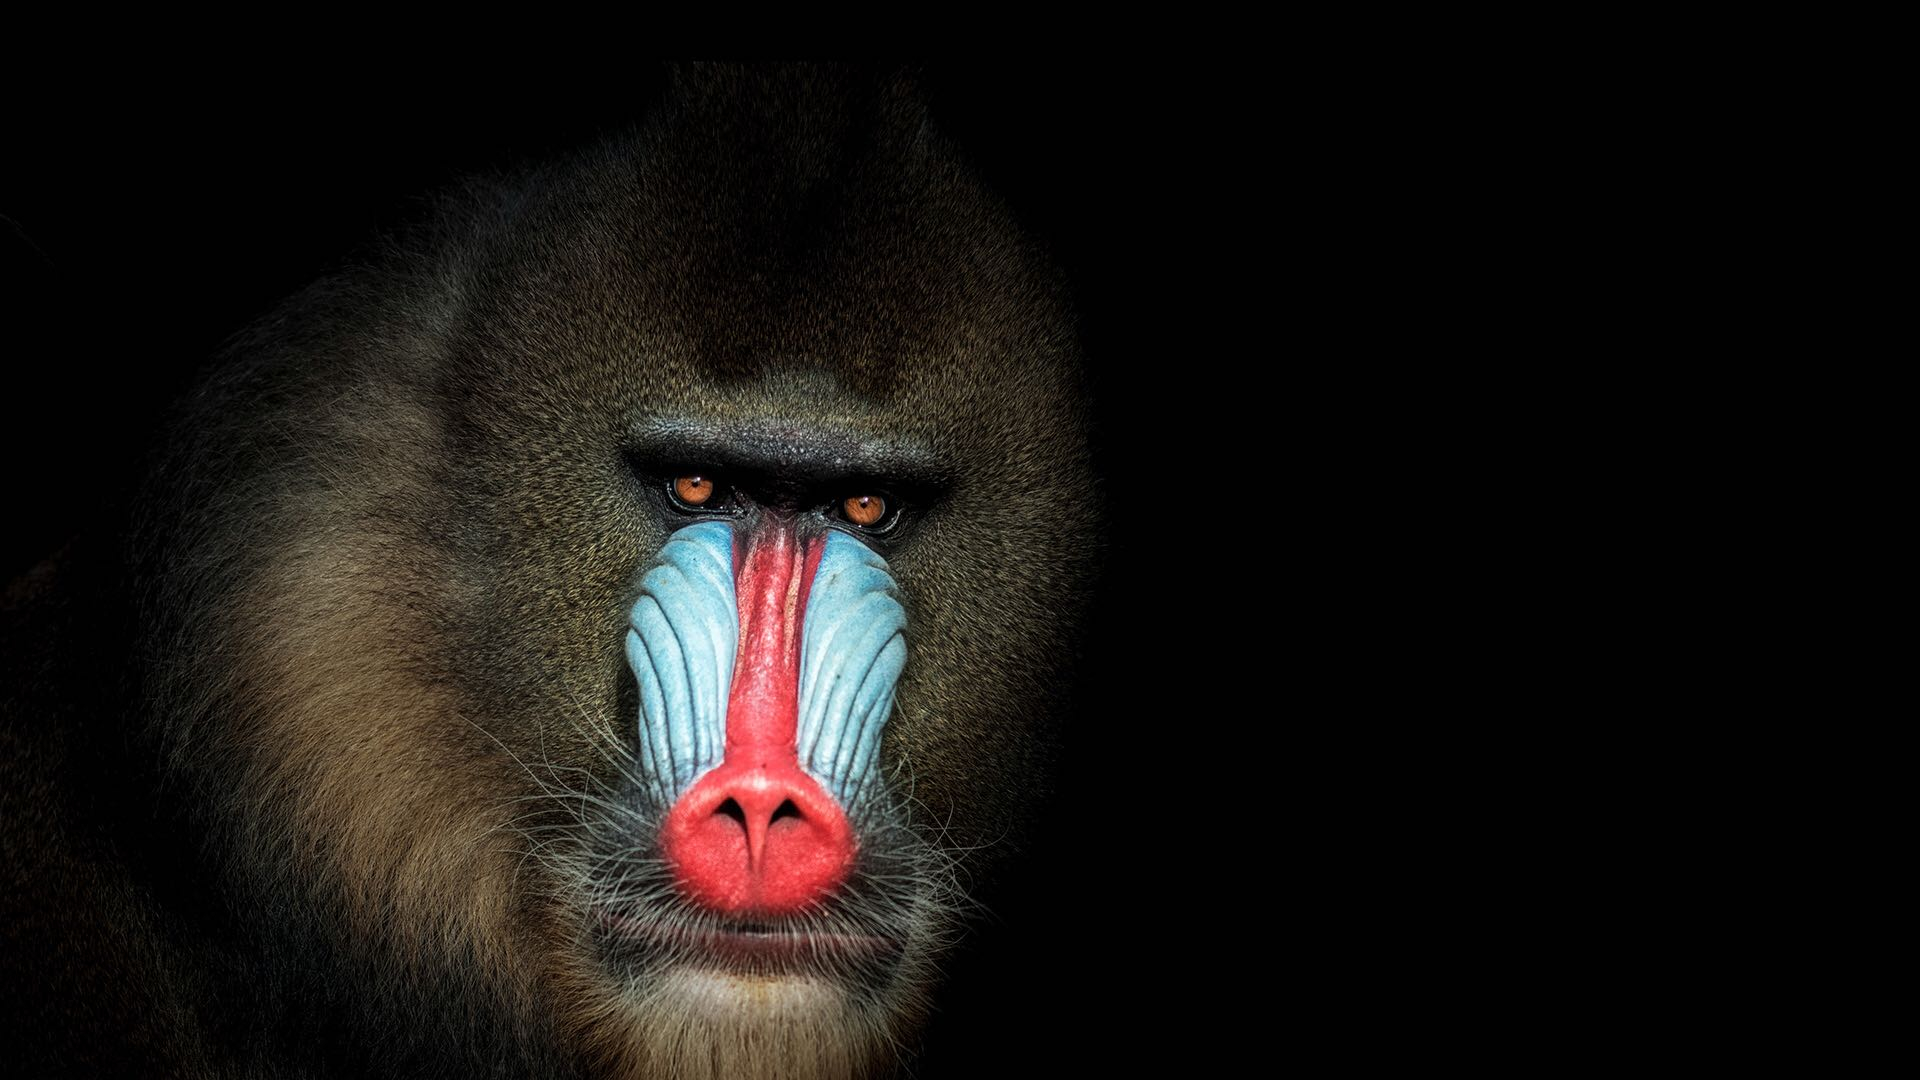  Monkey  Mania World s largest  and most colorful monkey  CGTN